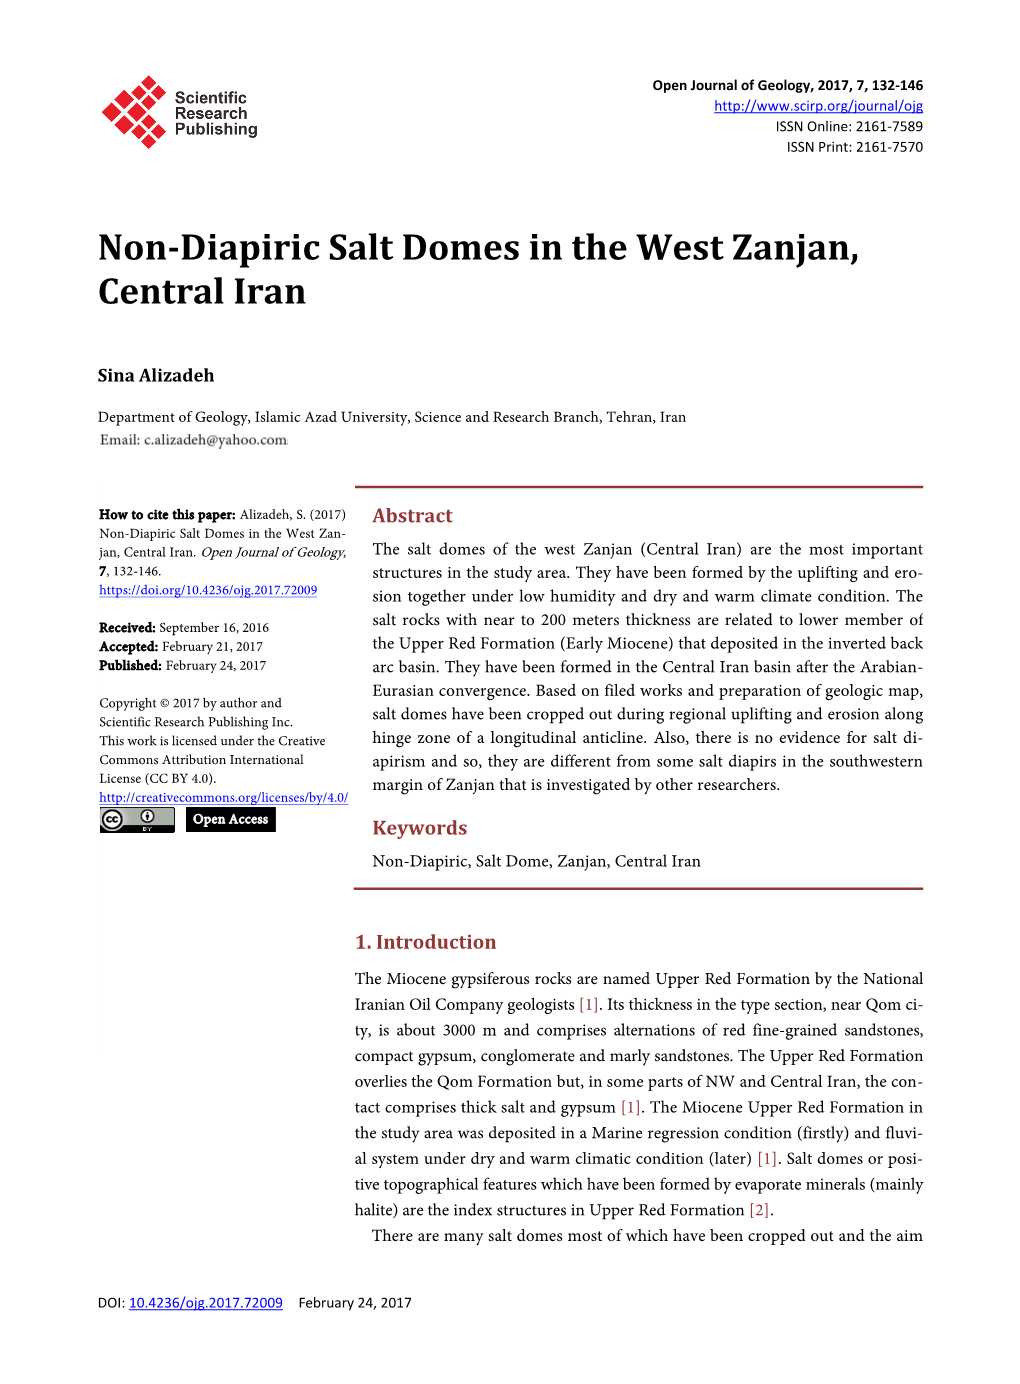 Non-Diapiric Salt Domes in the West Zanjan, Central Iran